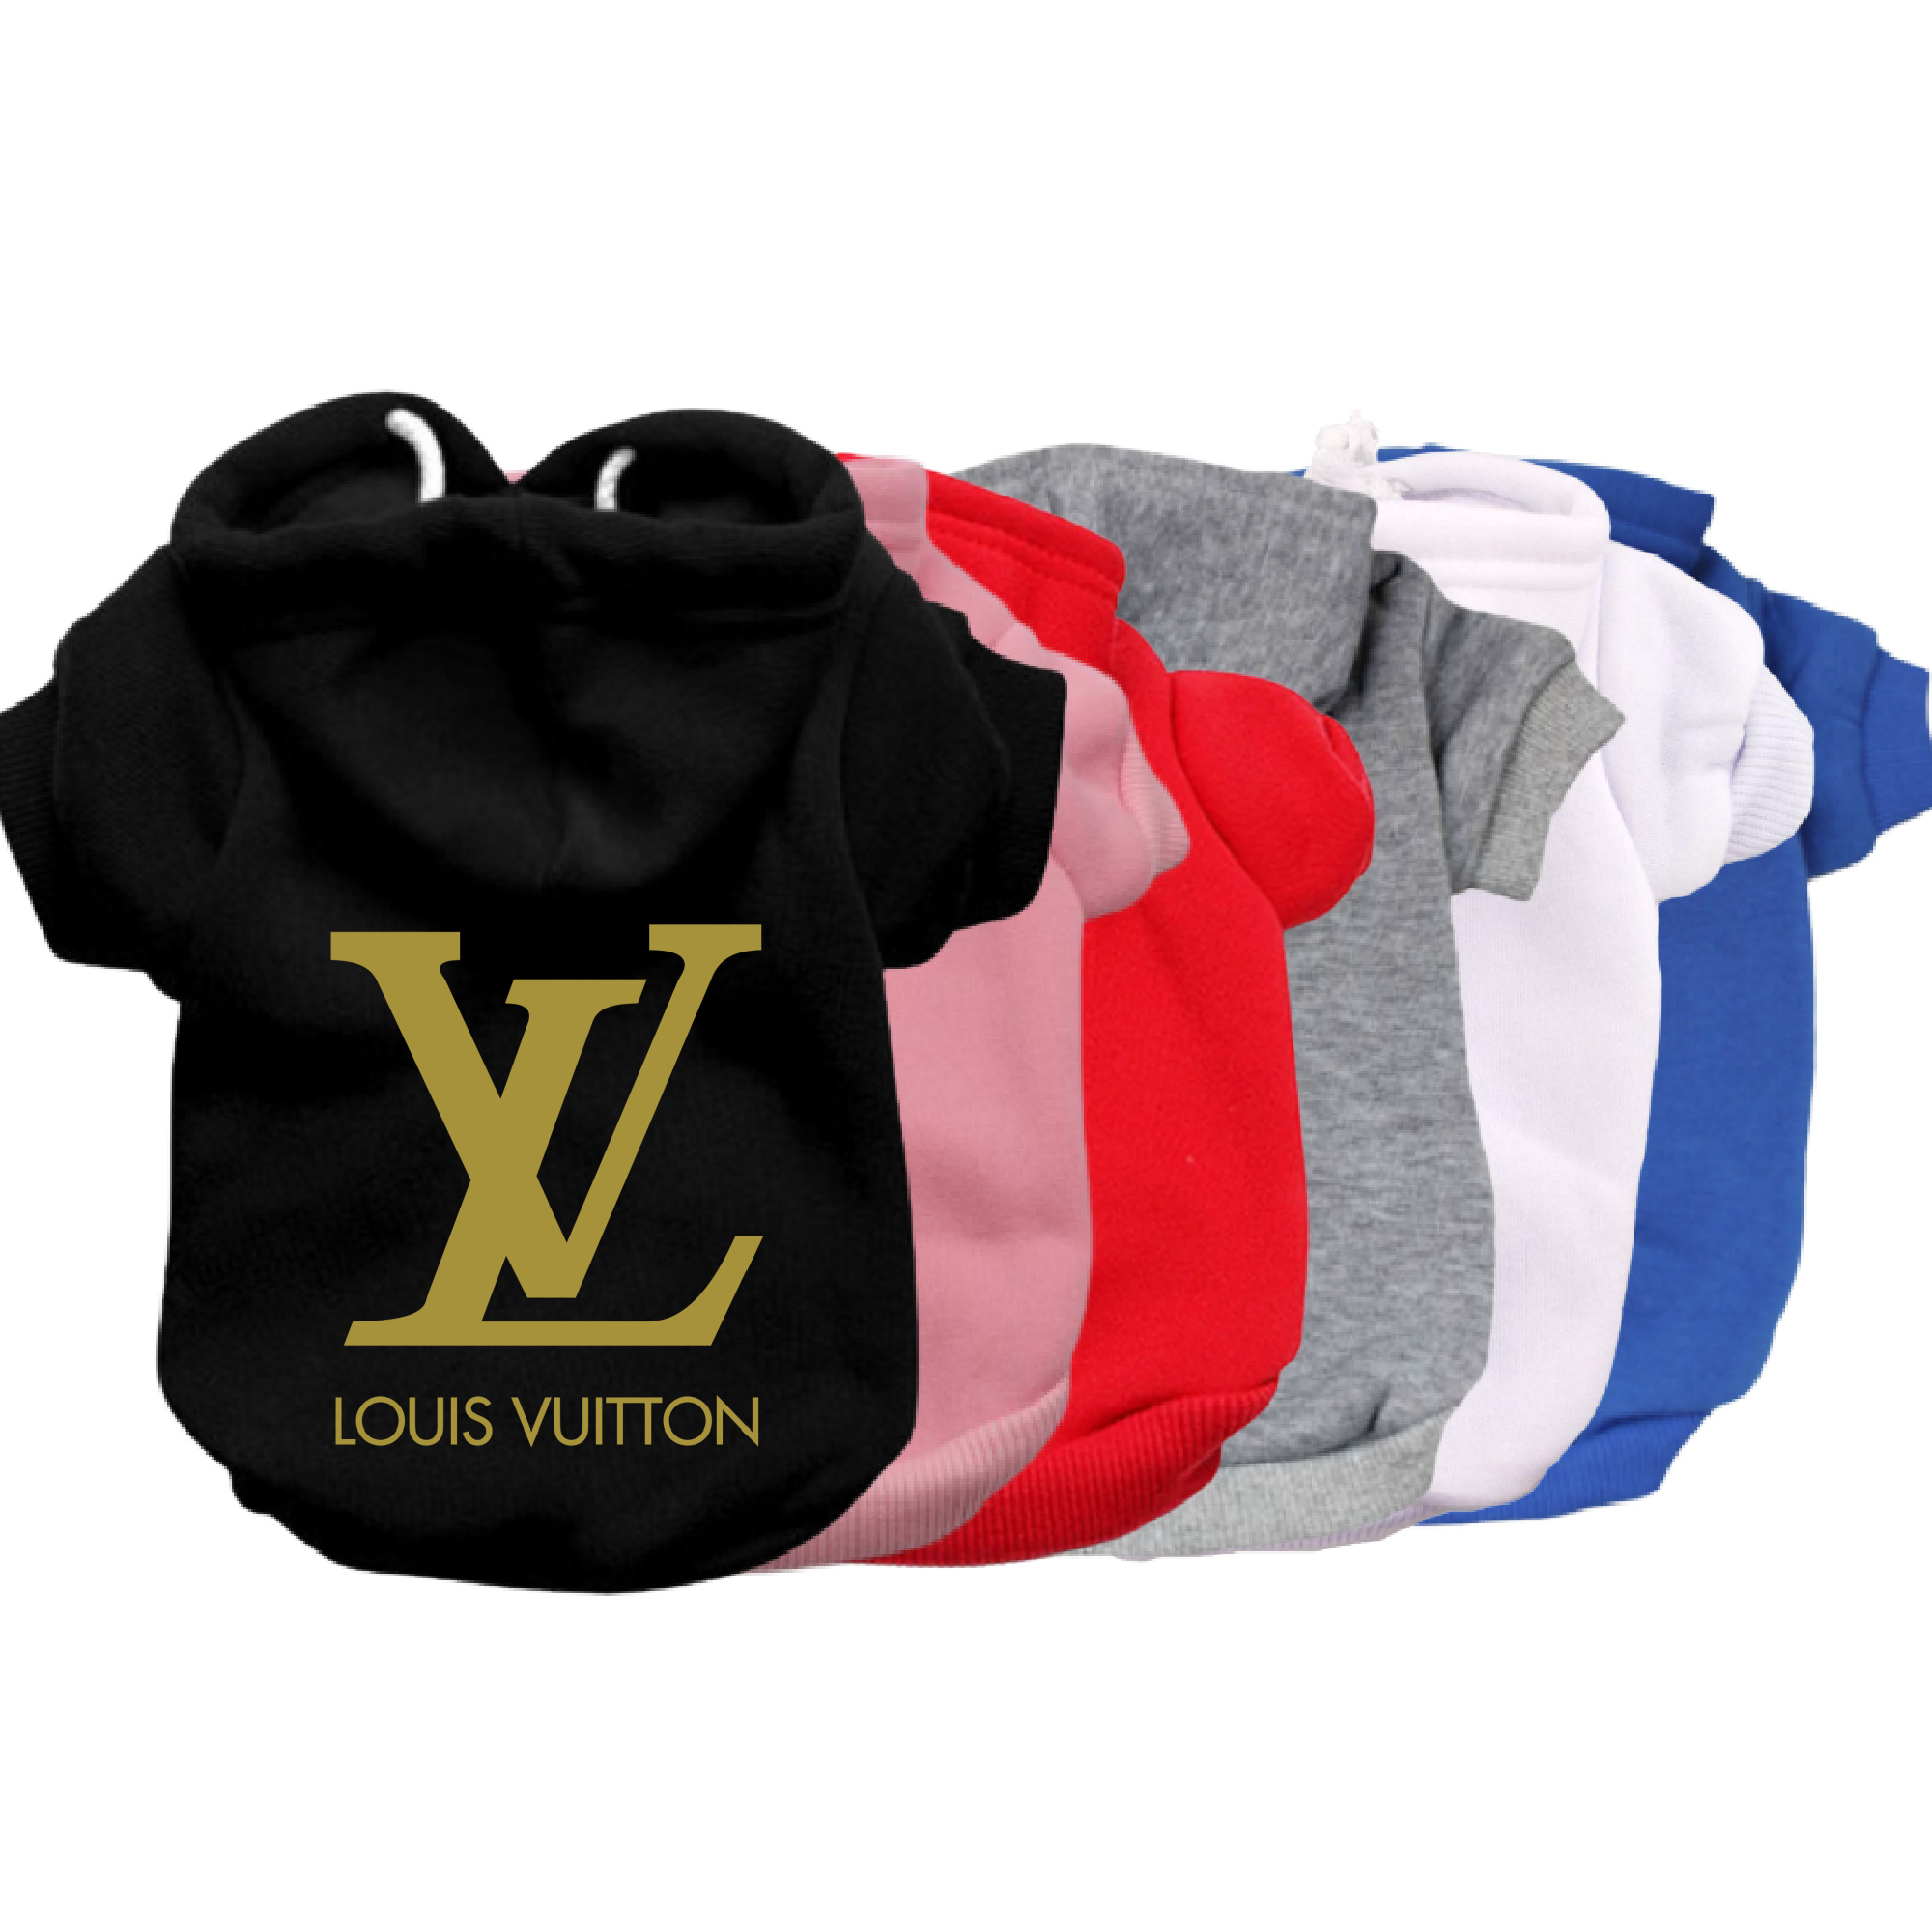 Louis Vuitton Dog Sweatshirt